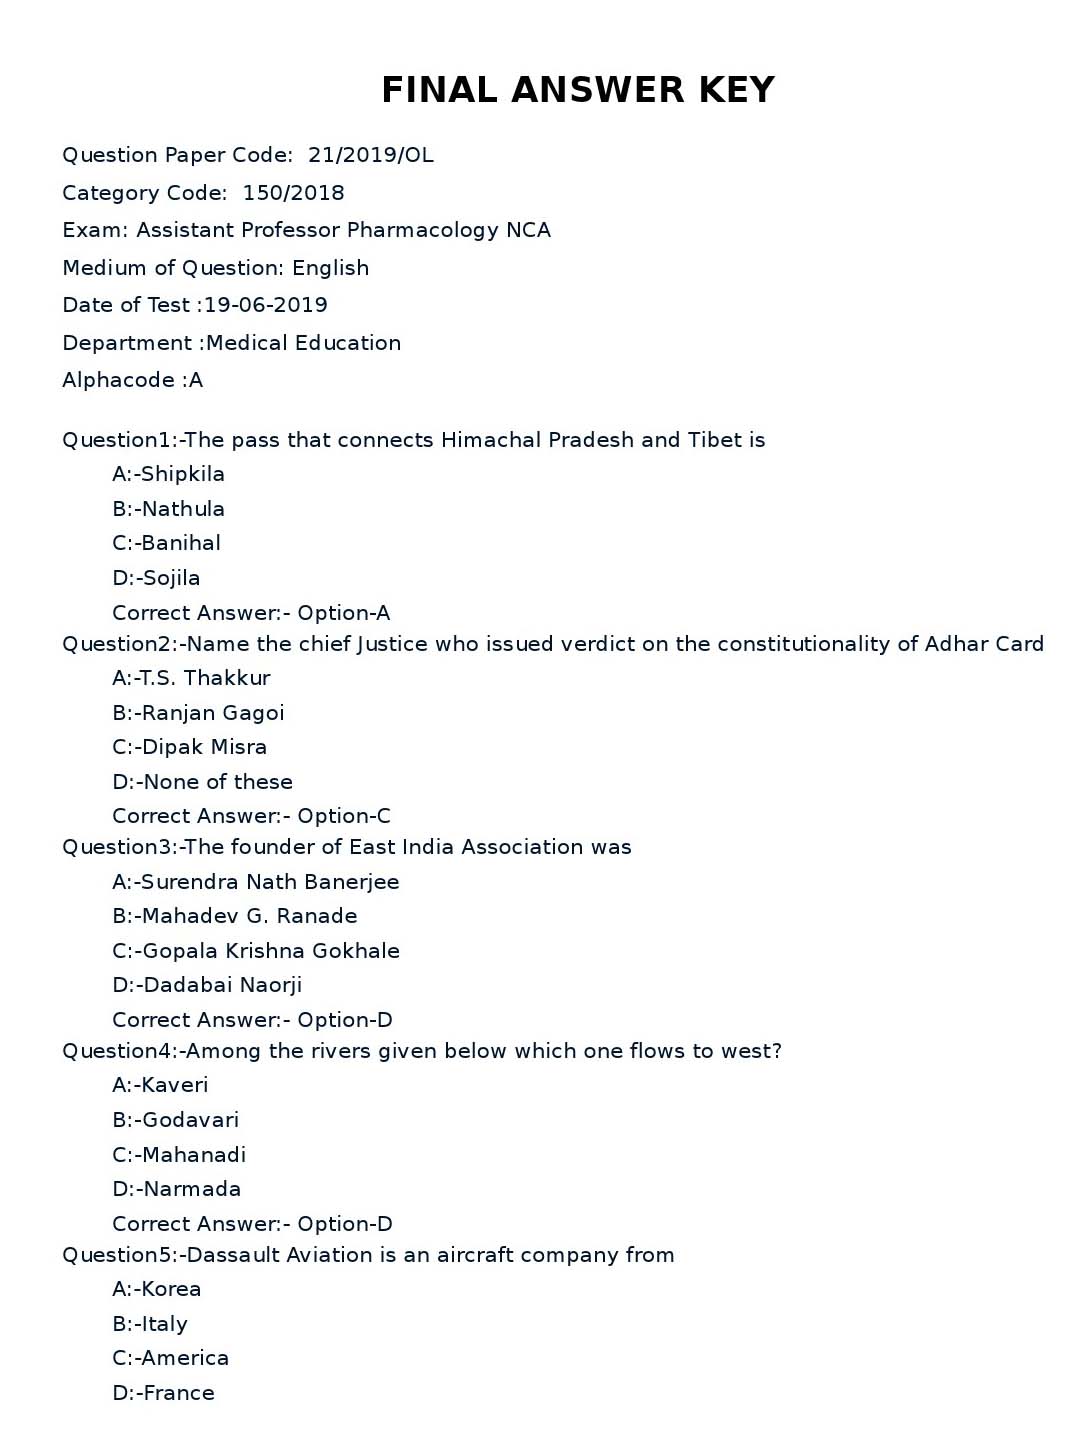 KPSC Assistant Professor Pharmacology Medicine Exam 2019 Code 212019OL 1